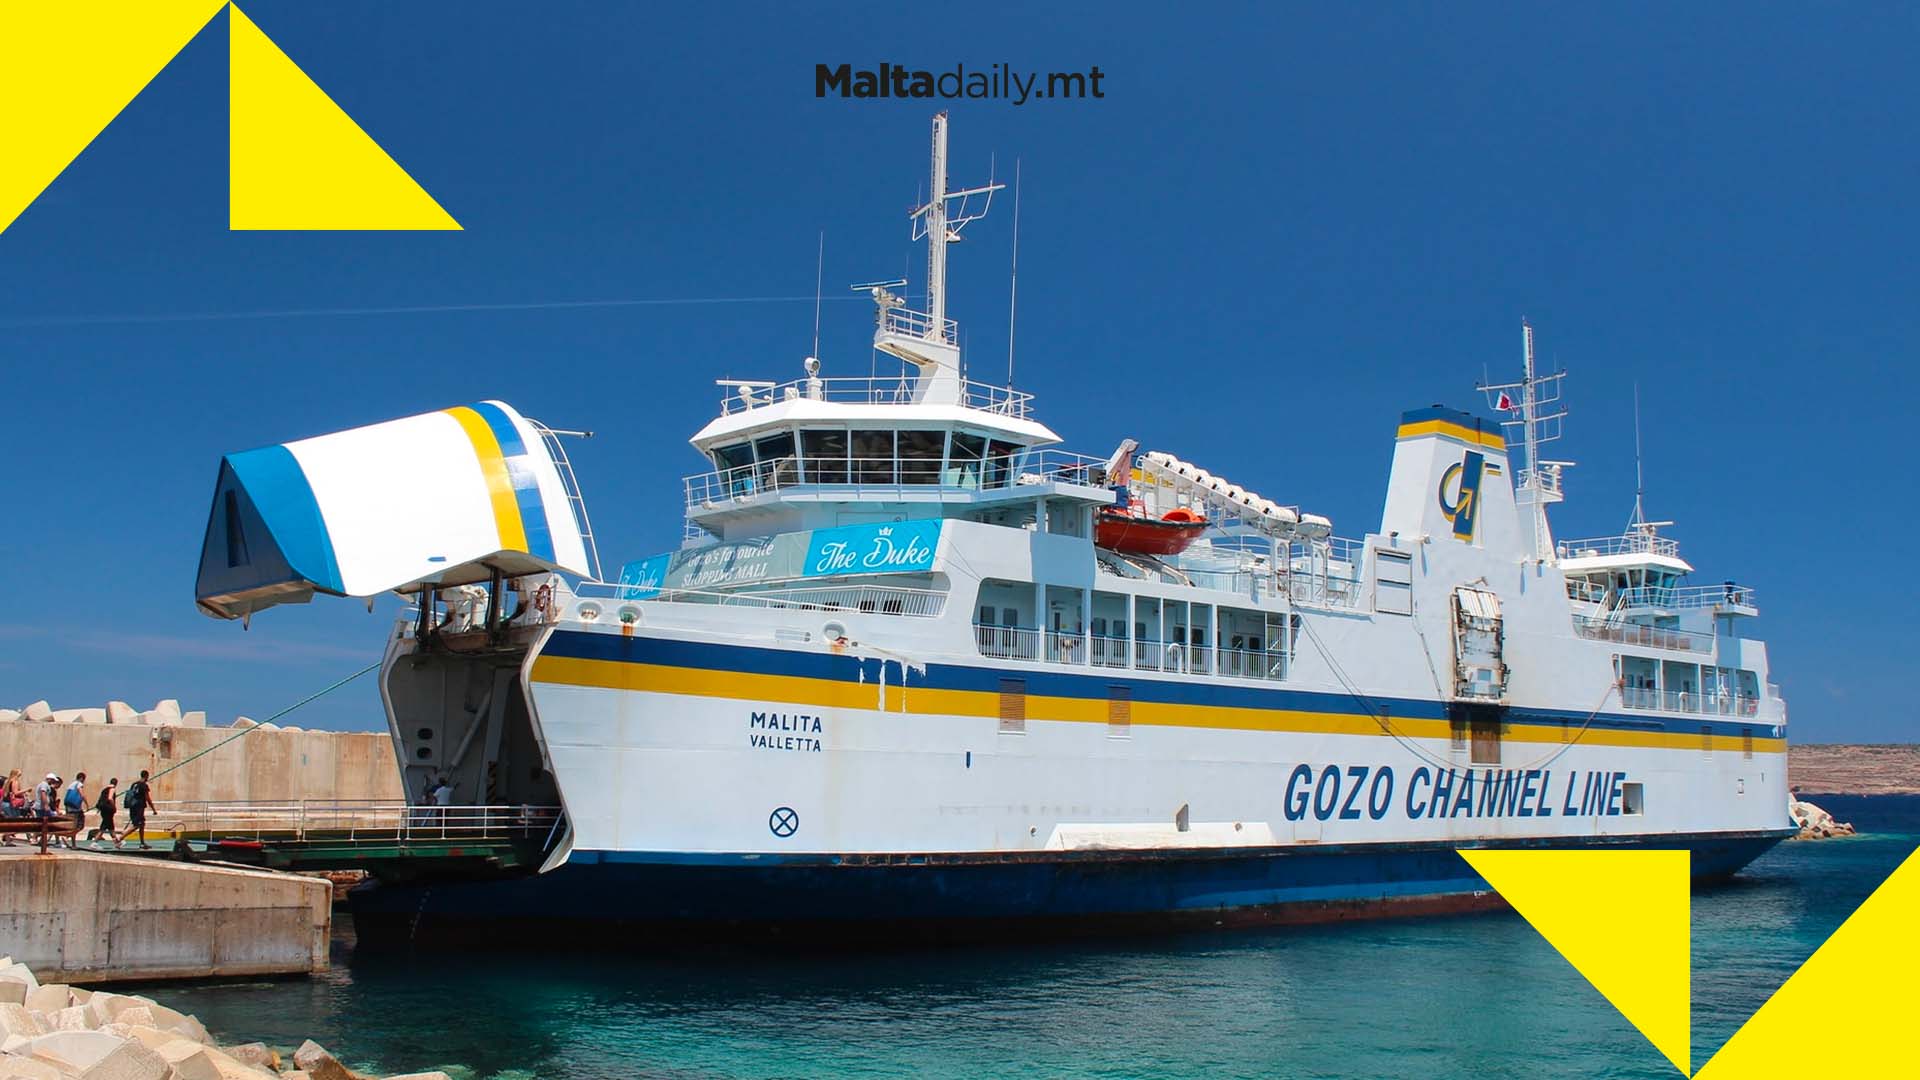 Around 1.8 million passengers cross Malta-Gozo channel in summer 2022